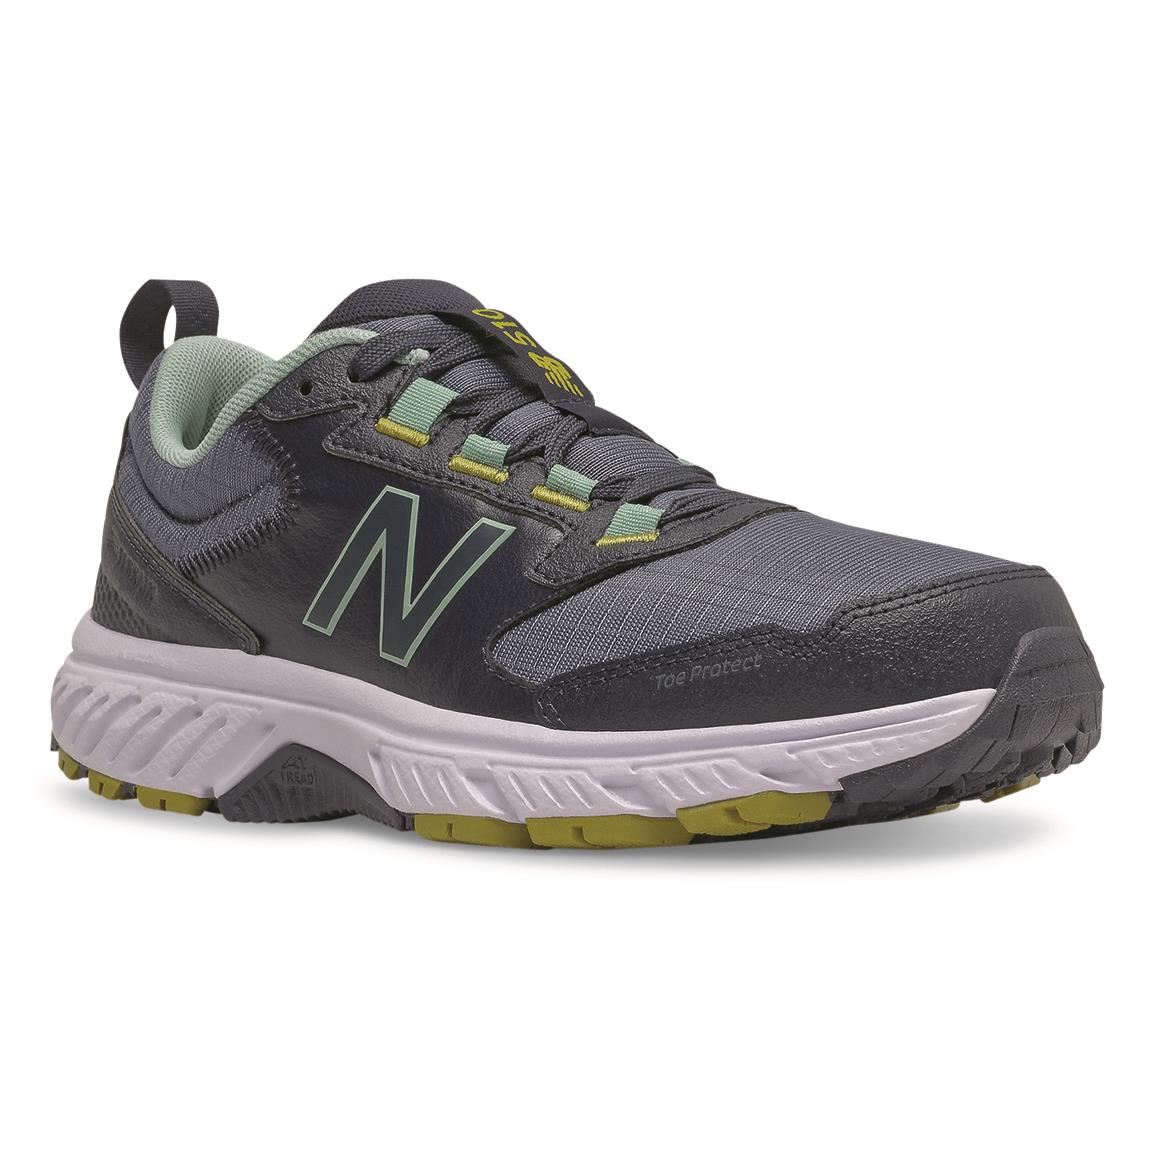 New Balance Women's 510v5 Trail Running Shoes, Pigment